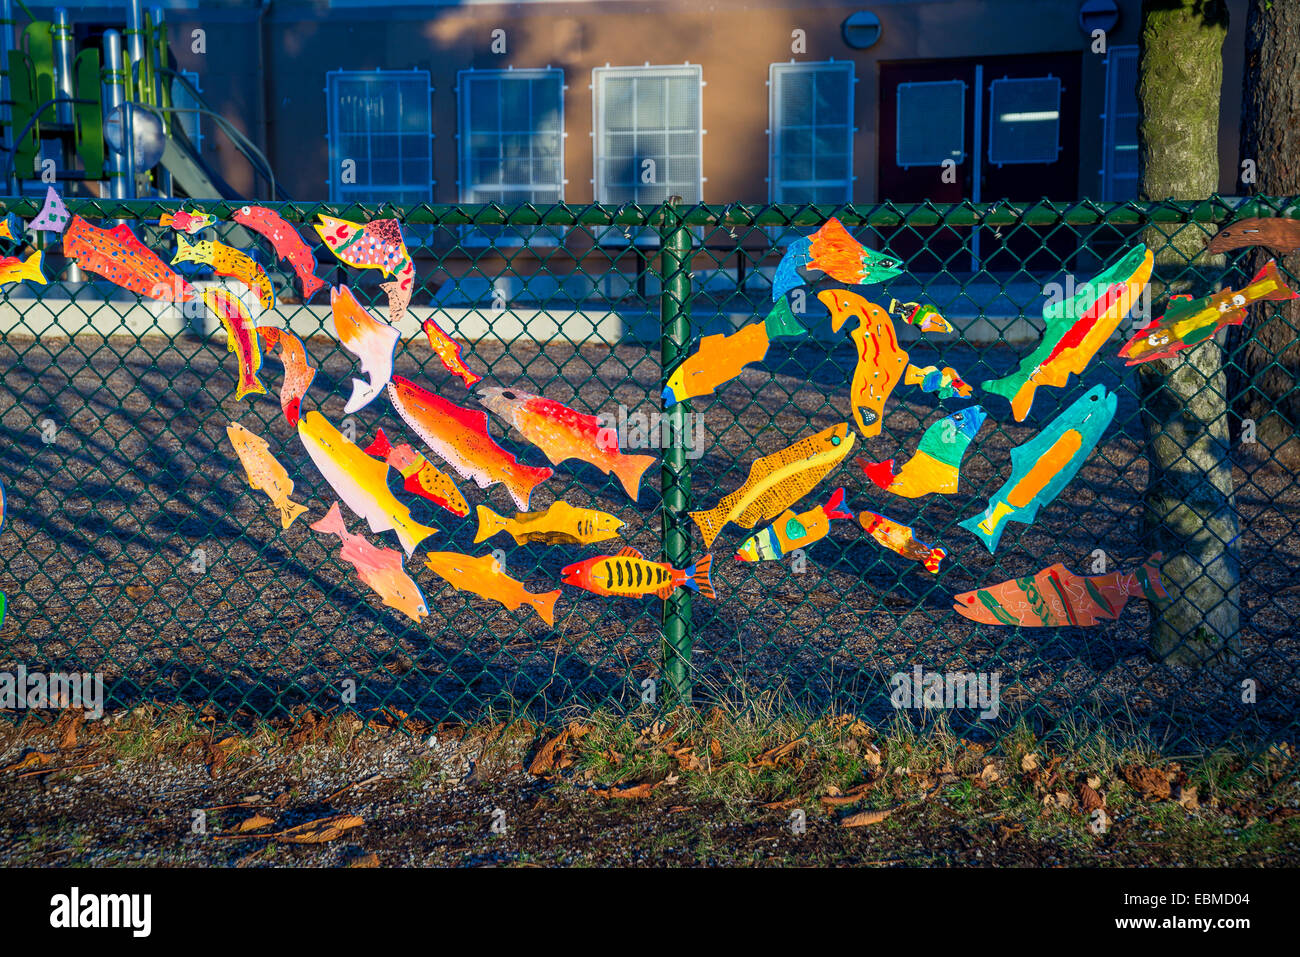 Stream of dreams, salmon art on fence, Hastings School, Vancouver, British Columbia, Canada Stock Photo